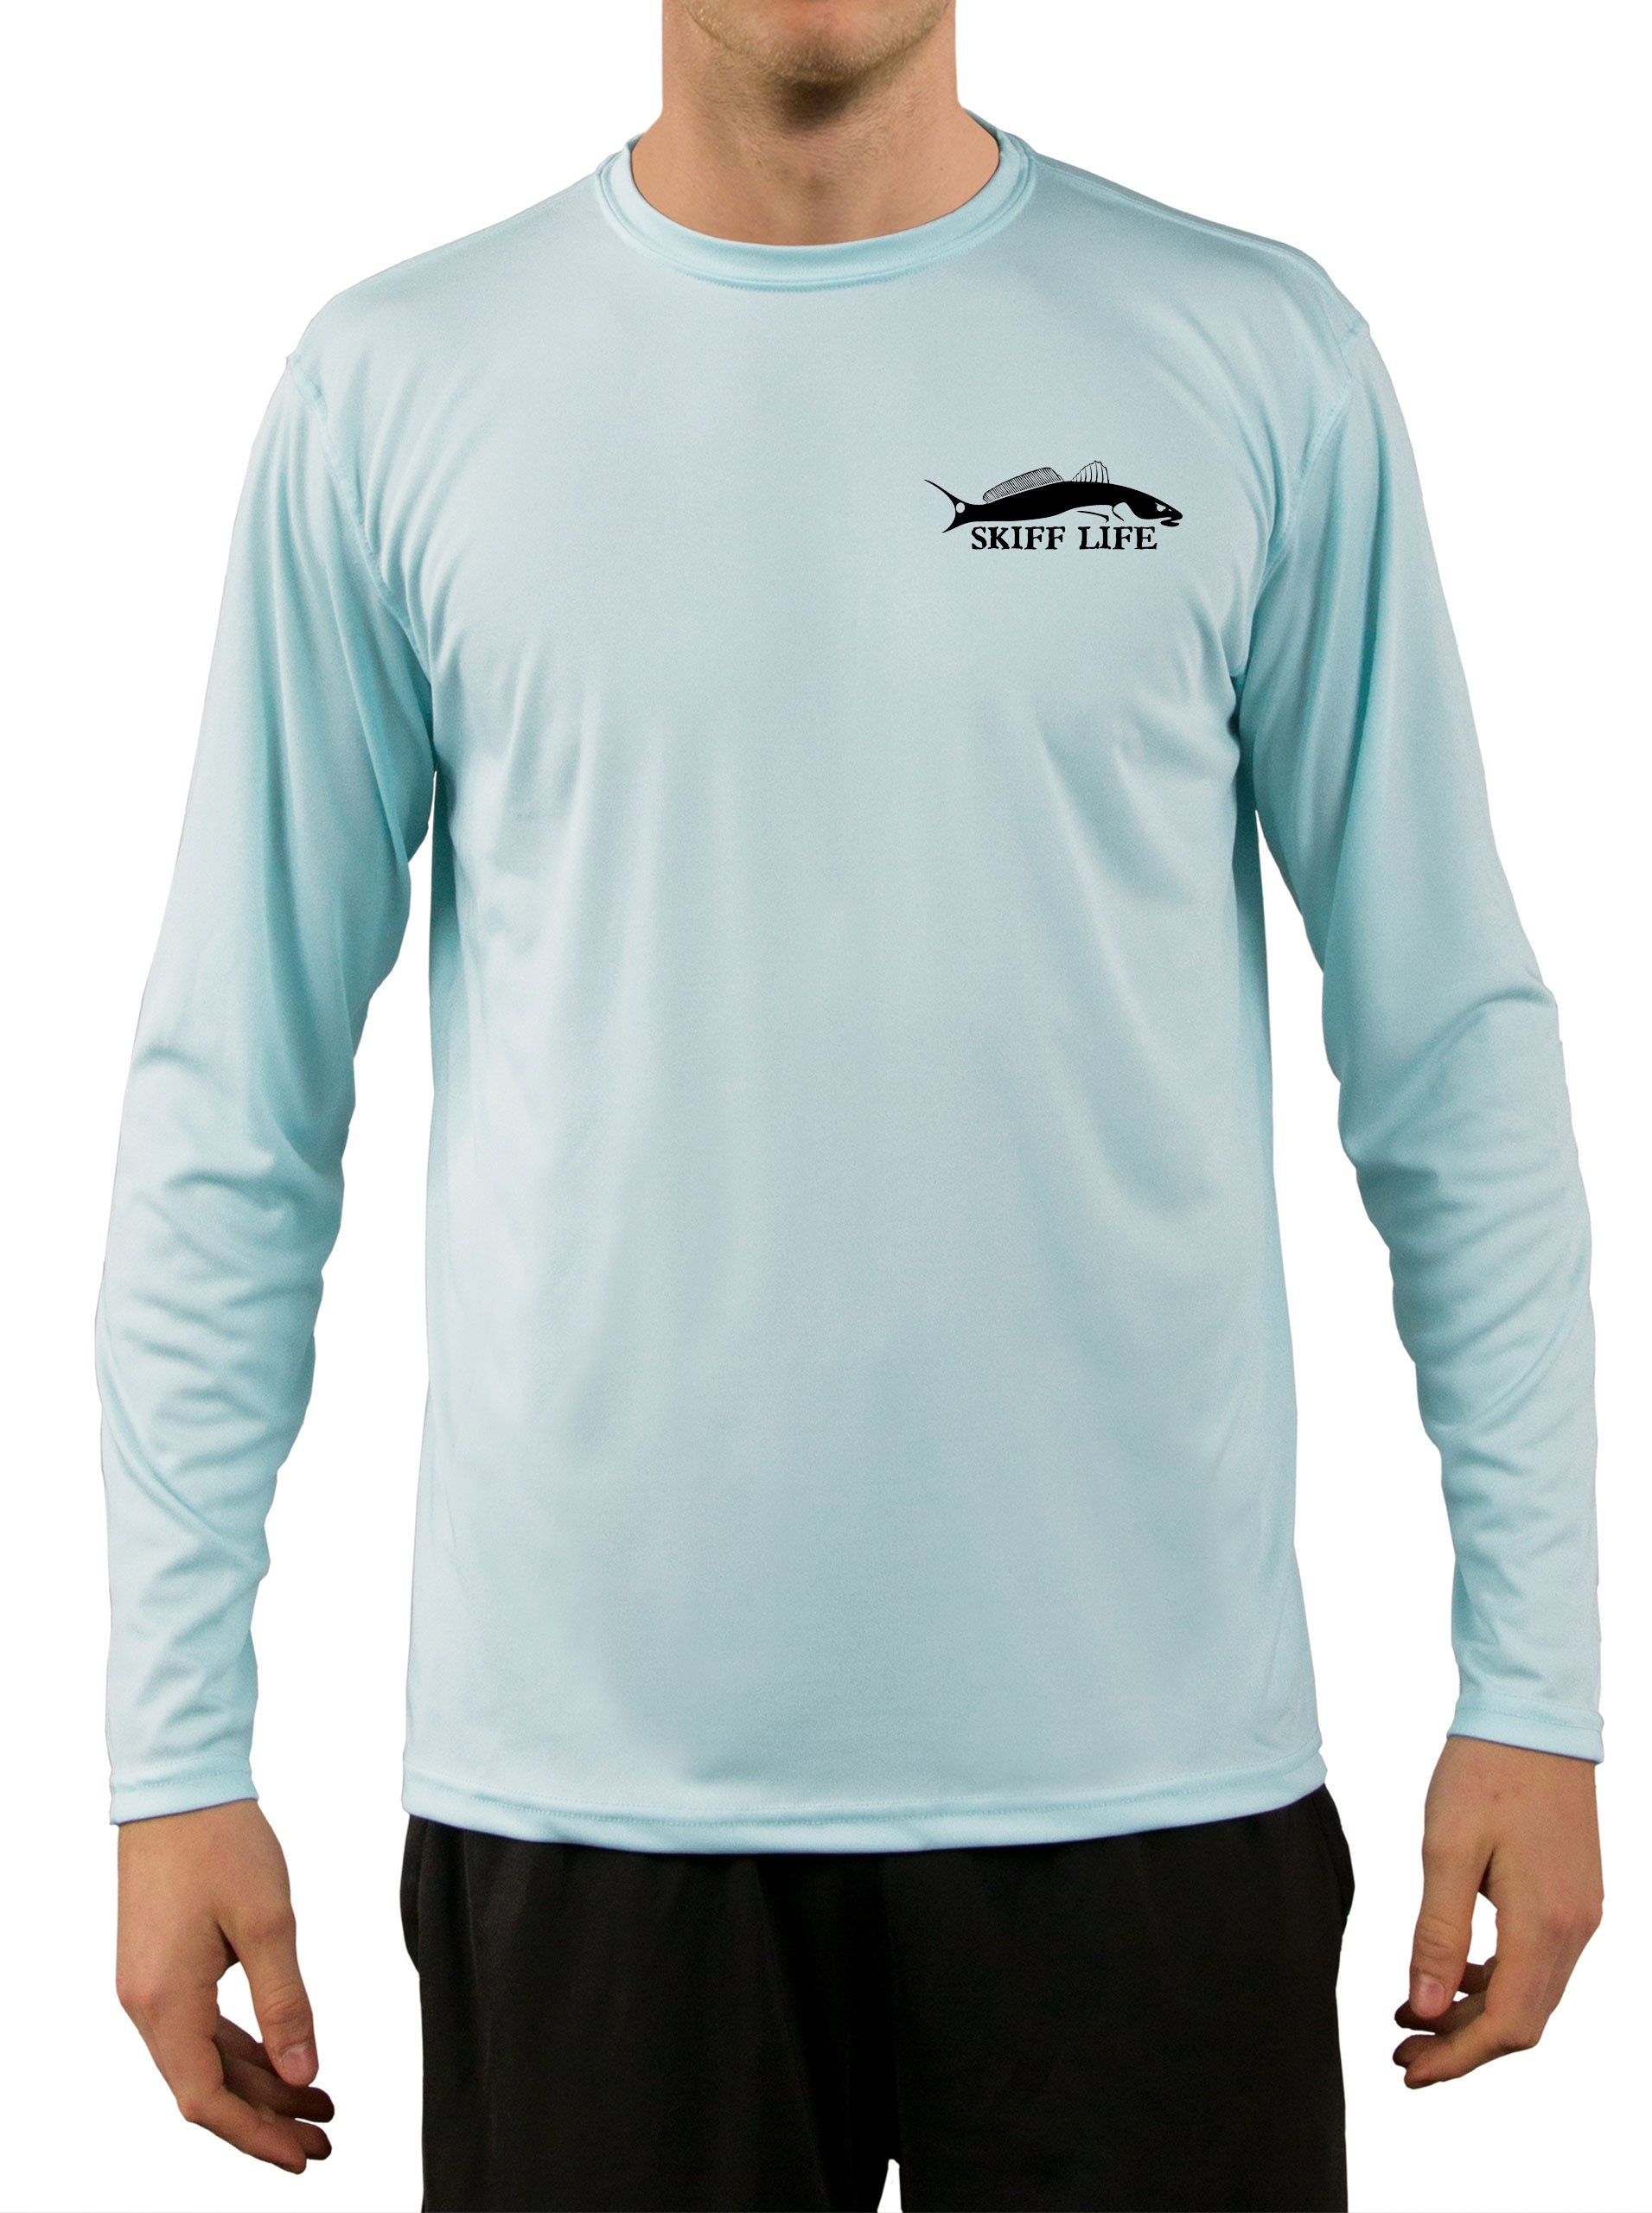 Men's Long Sleeve Sun Protection Fishing Shirt with Zipper Pockets UPF 50+  Lightweight Cool Sun Shirts for Men Hiking Outdoor